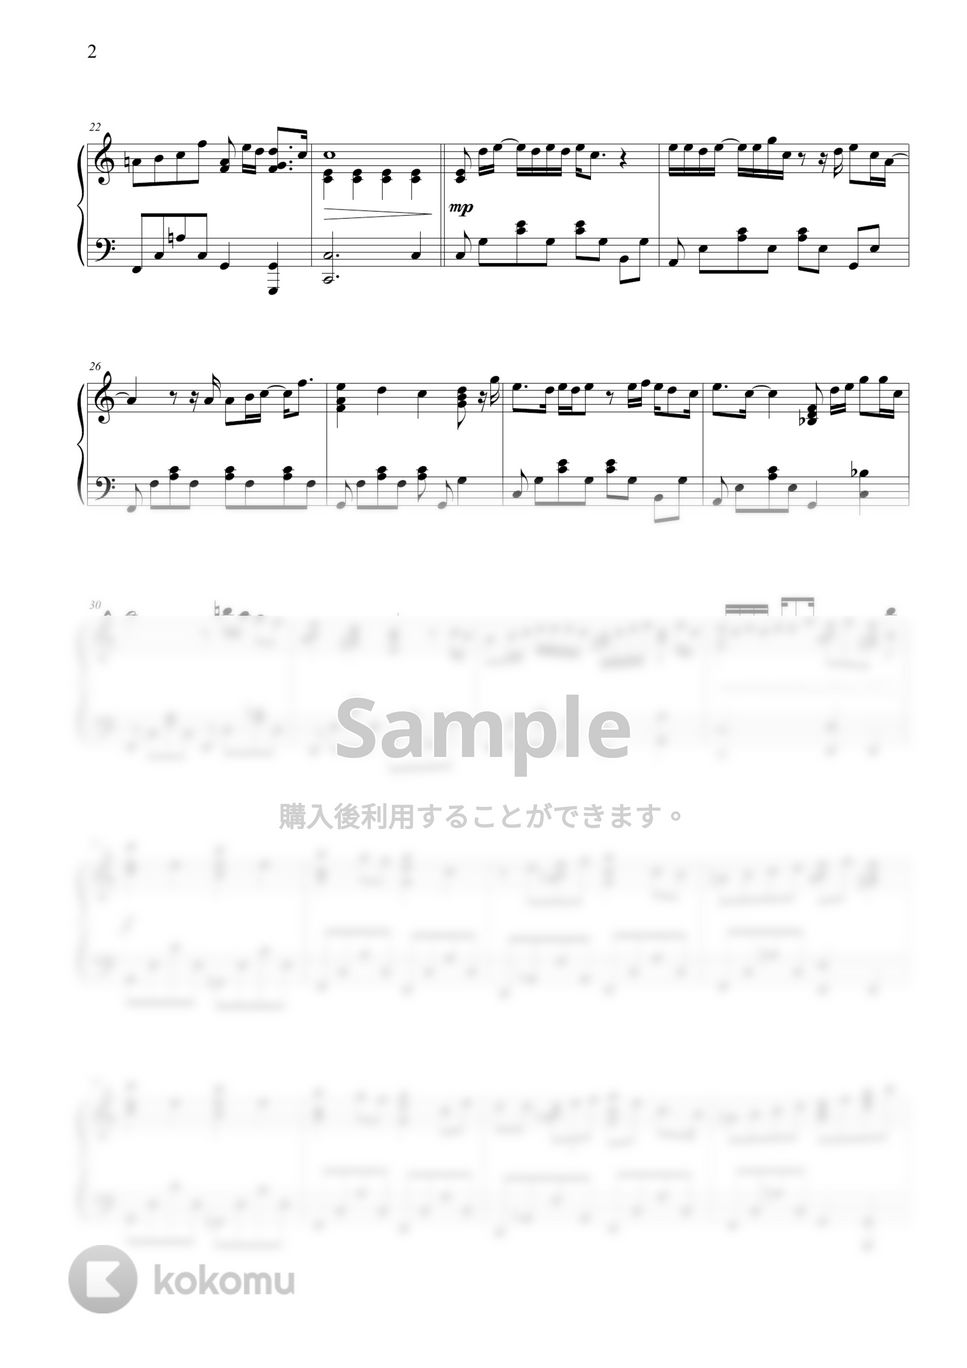 Musical Mozart! - Gold von den Sternen (Golden Stars) (初級バージョン) by THIS IS PIANO